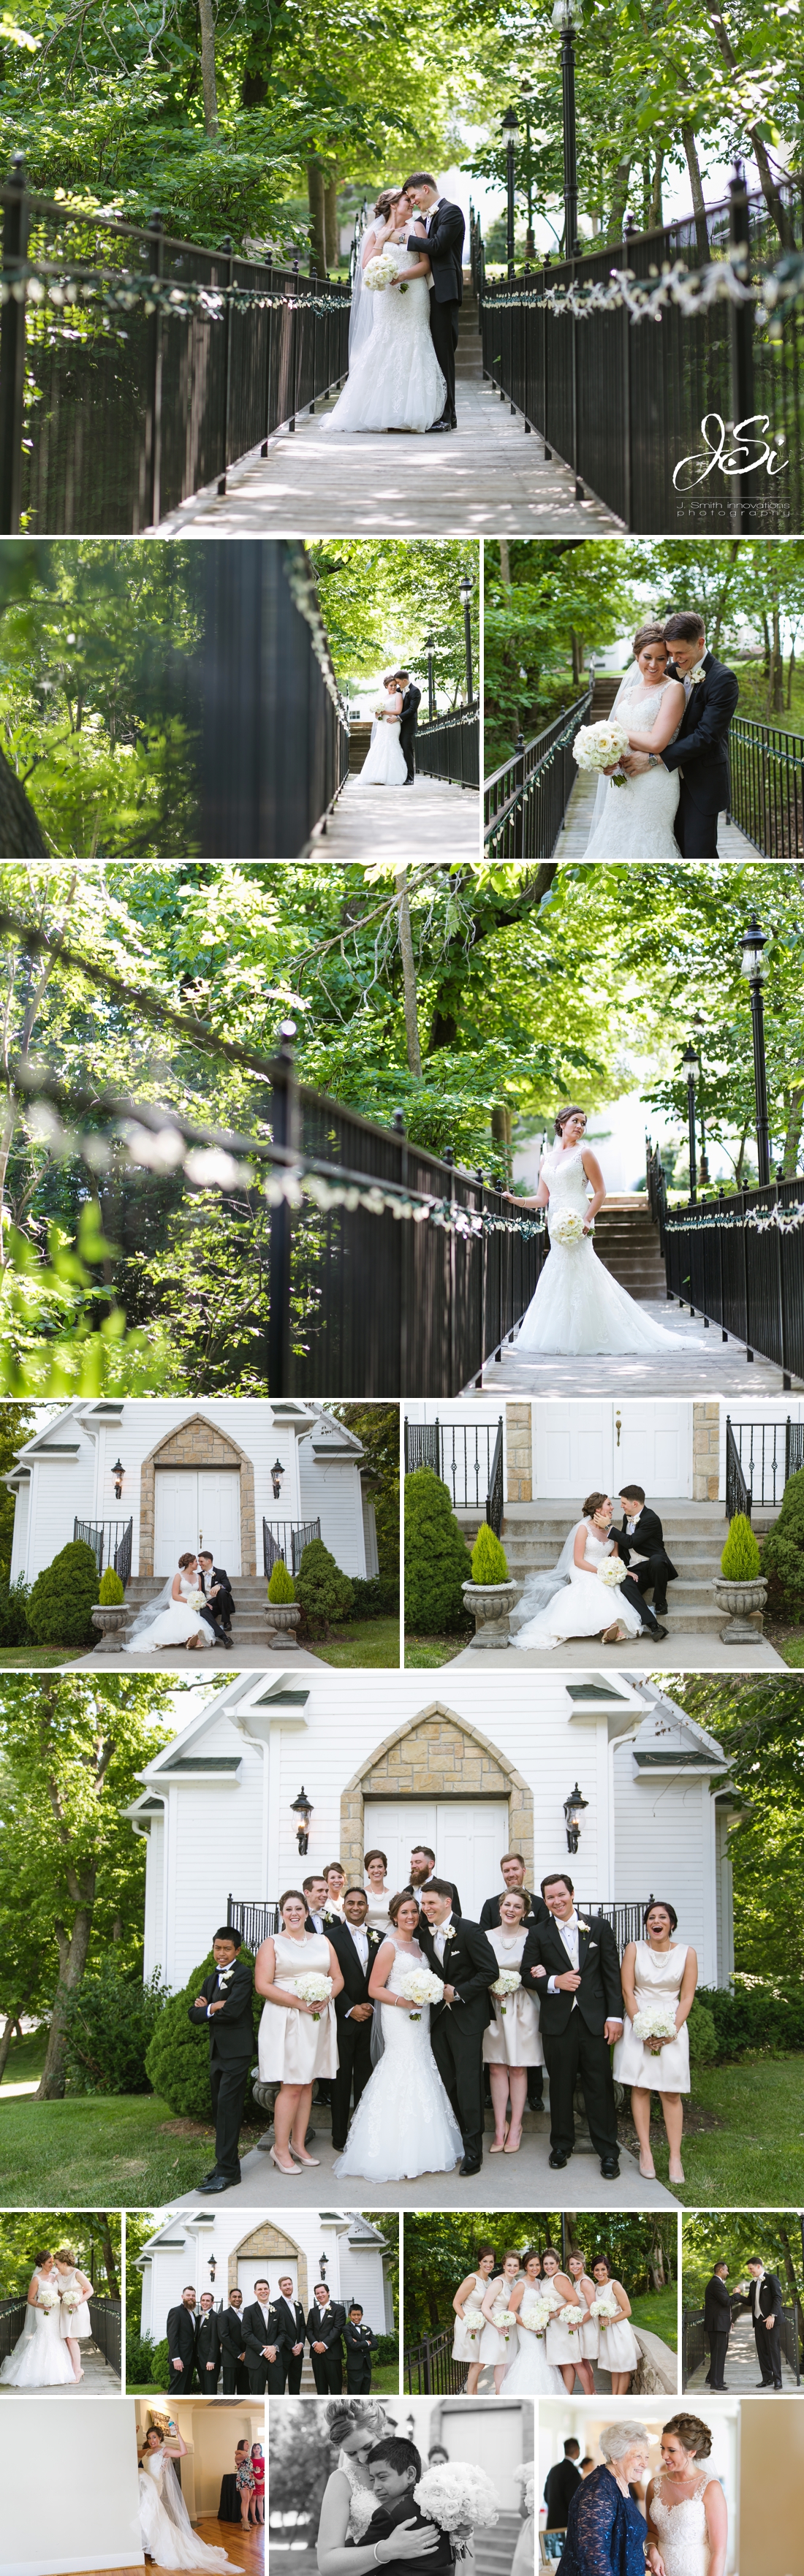 Parkville Hawthorne House elegant outdoor wedding bride groom bridal party photo